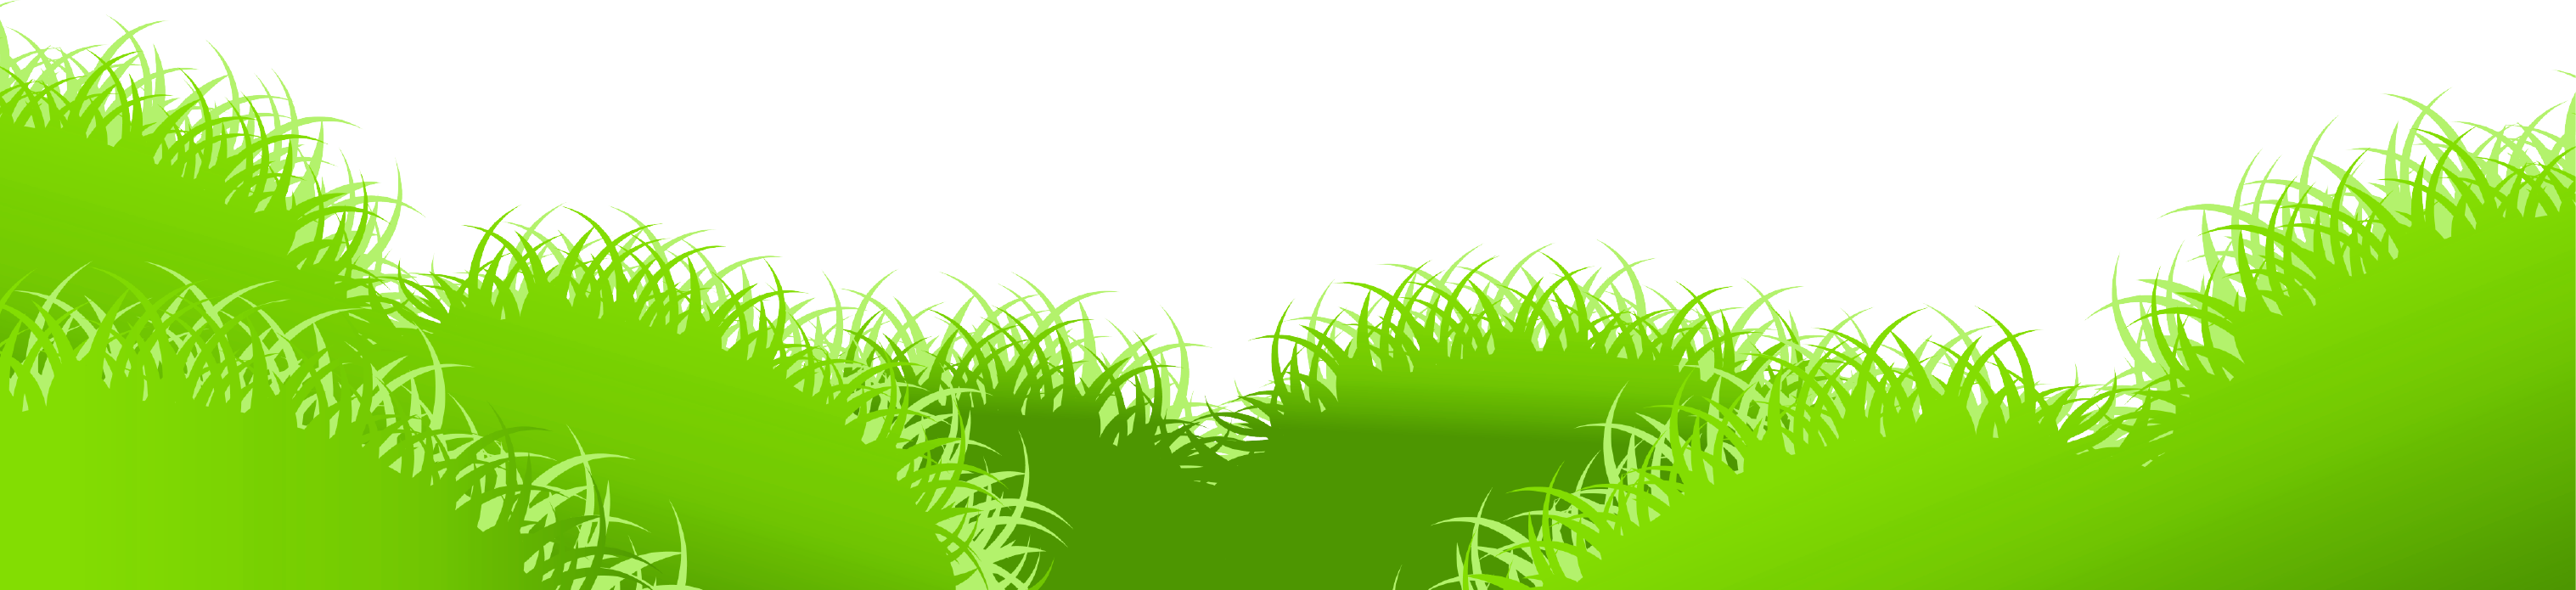 grassy plain clip art